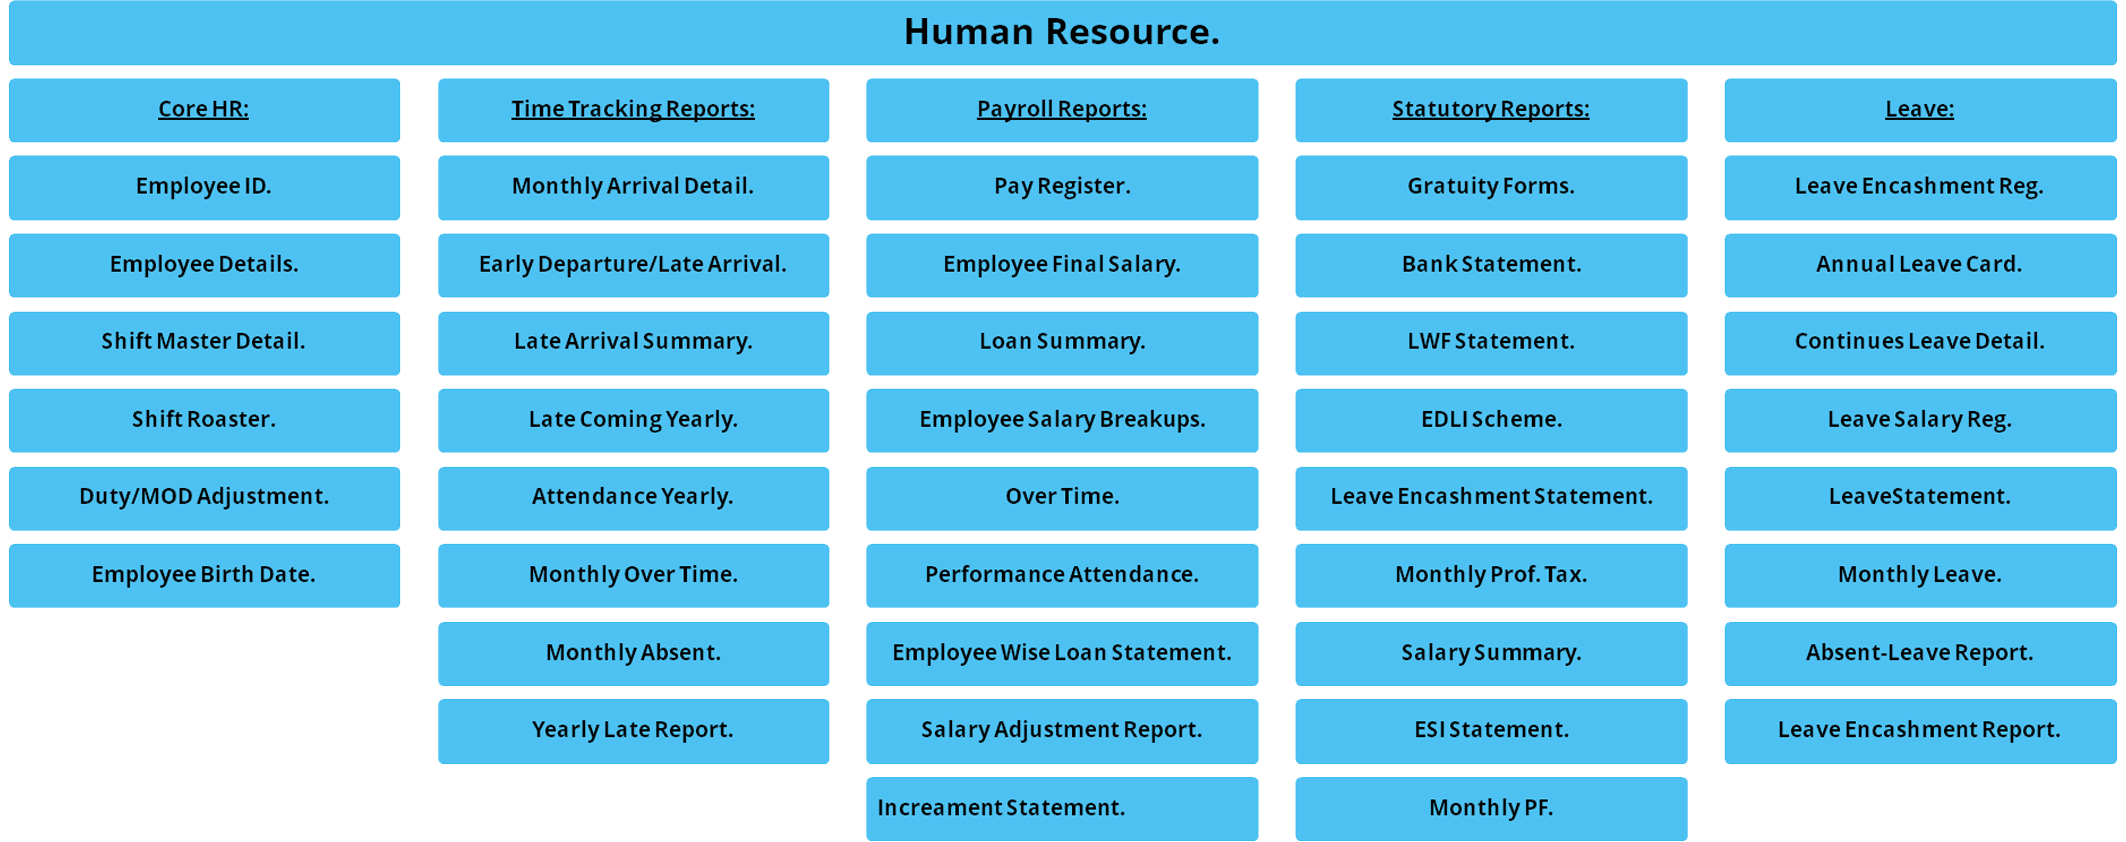 Human resource